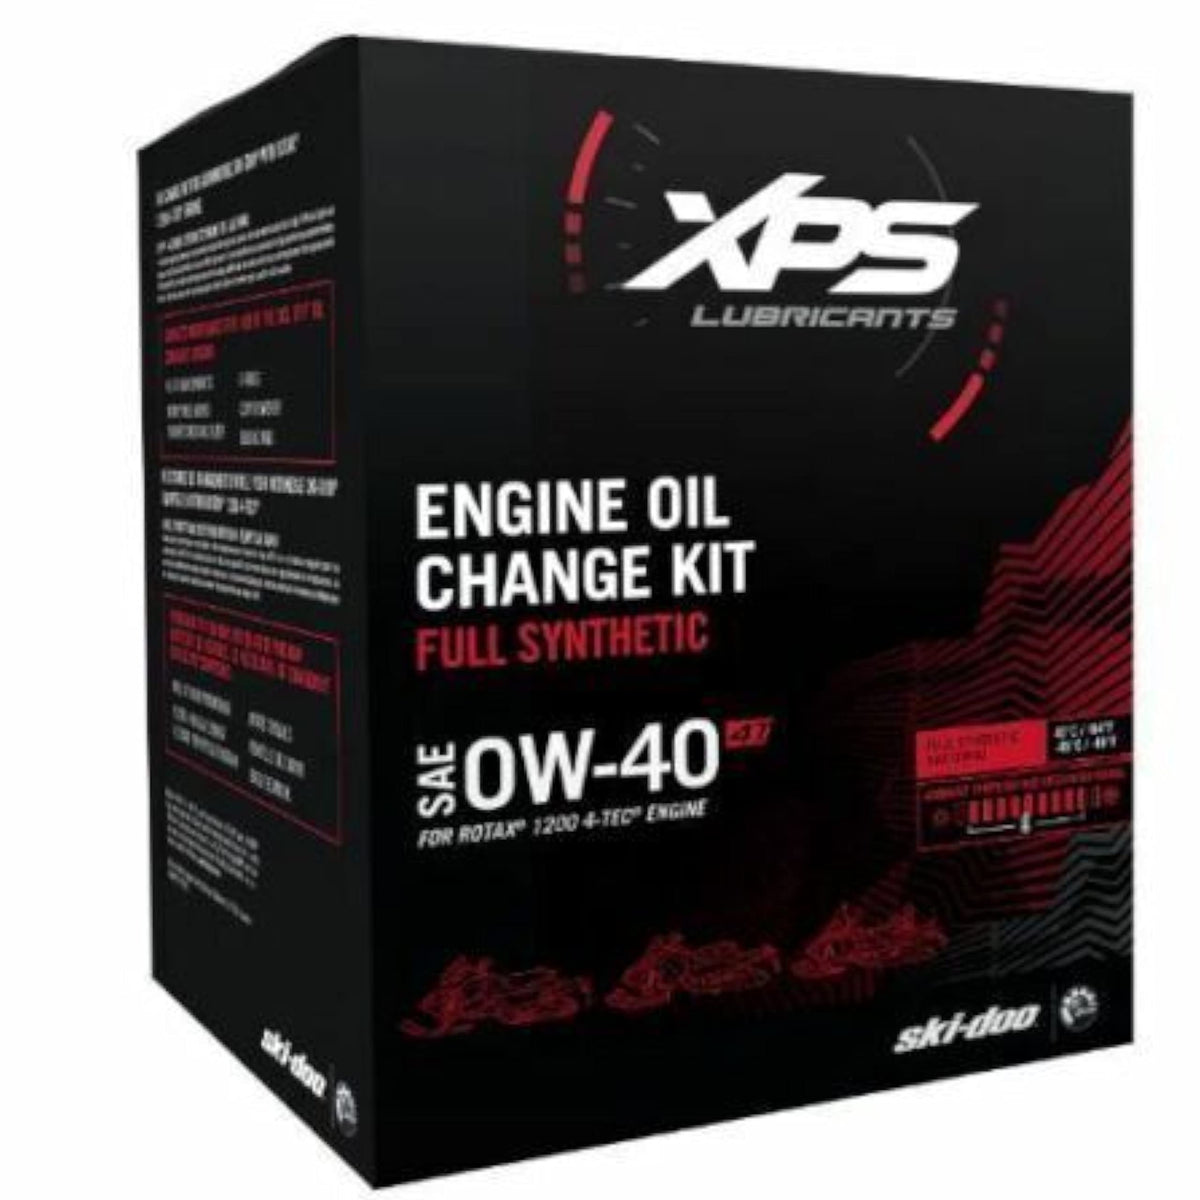 Ski-Doo New OEM, 4T 0W-40 Synthetic Oil Change Kit, Rotax 1200 4-TEC, 9779255